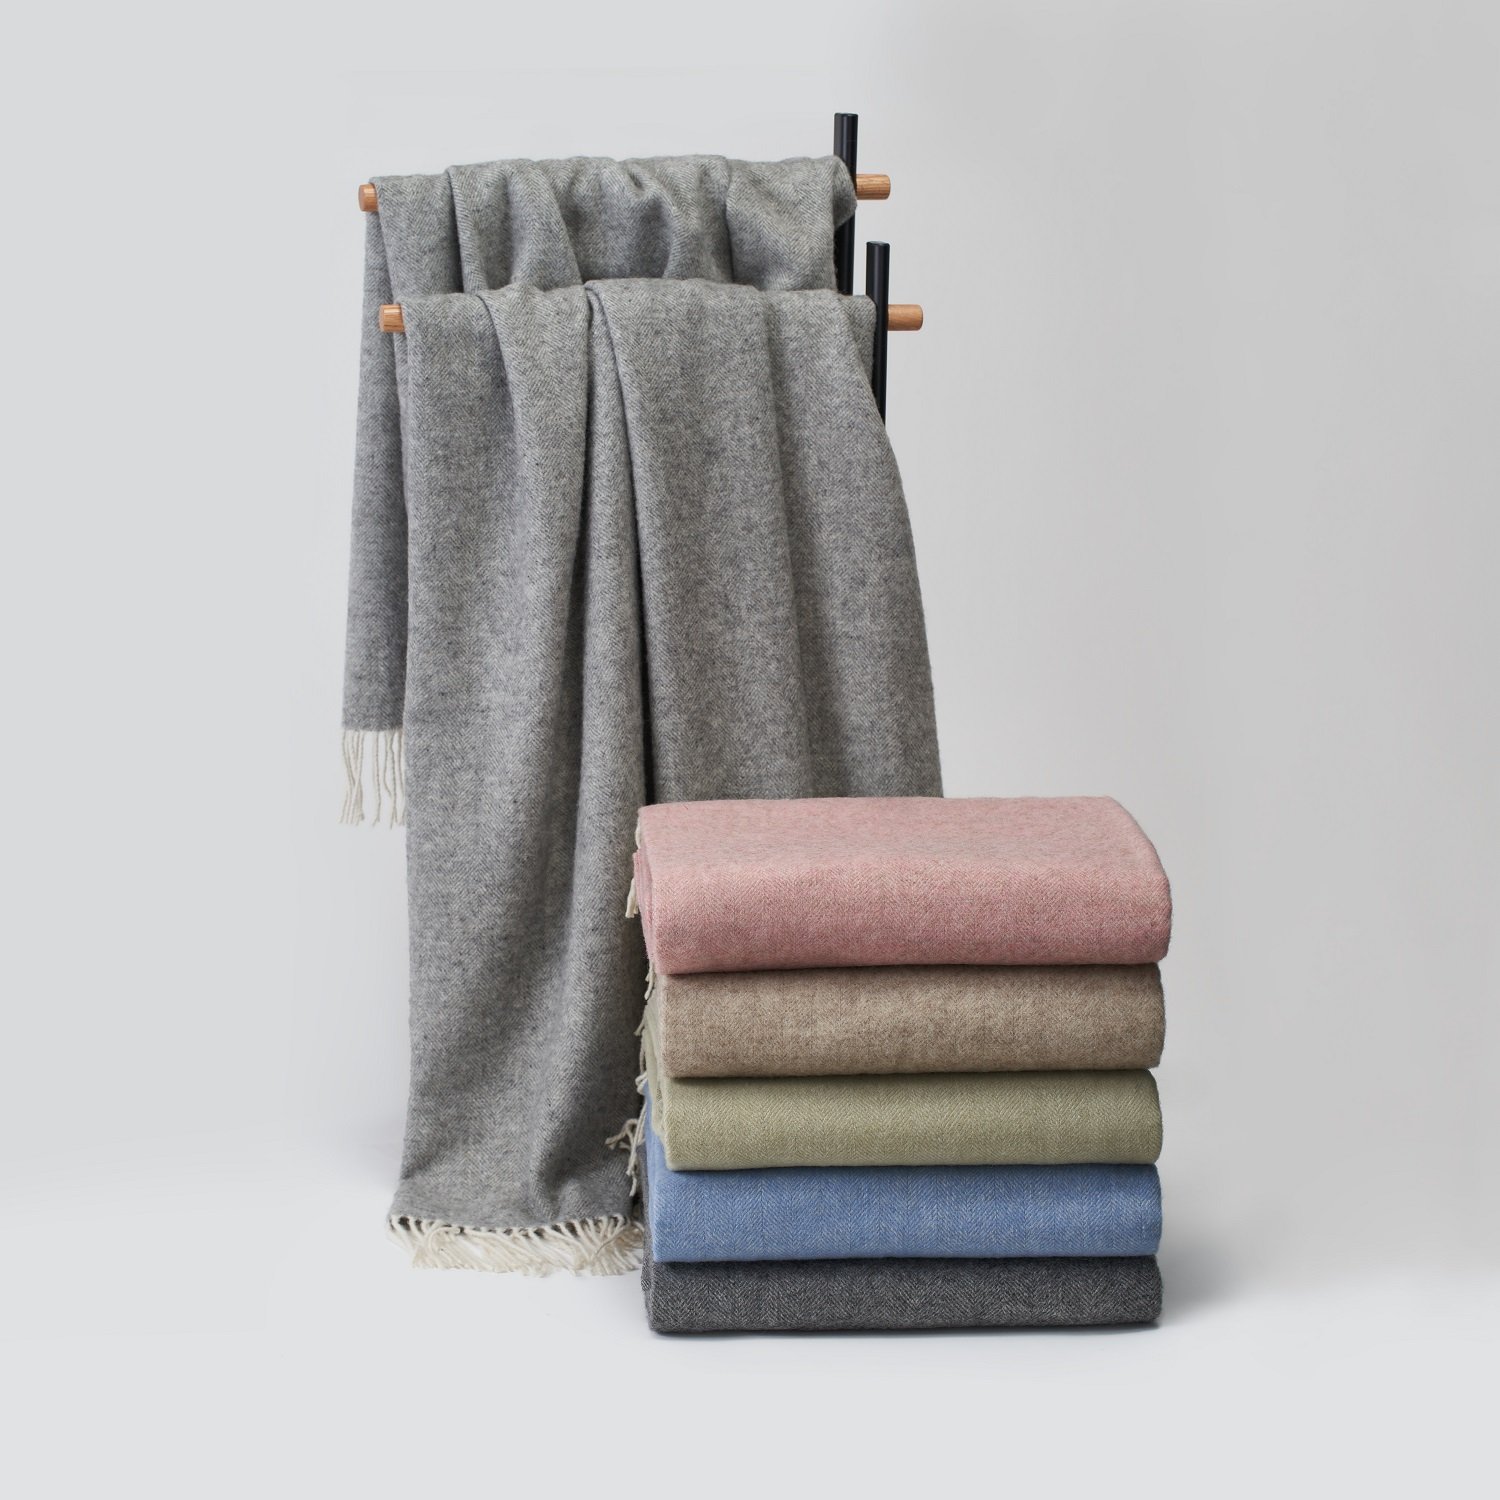 Manta 100% lana merino con flecos, tamaño 140x200cm, diseño twill  habano/cielo melange